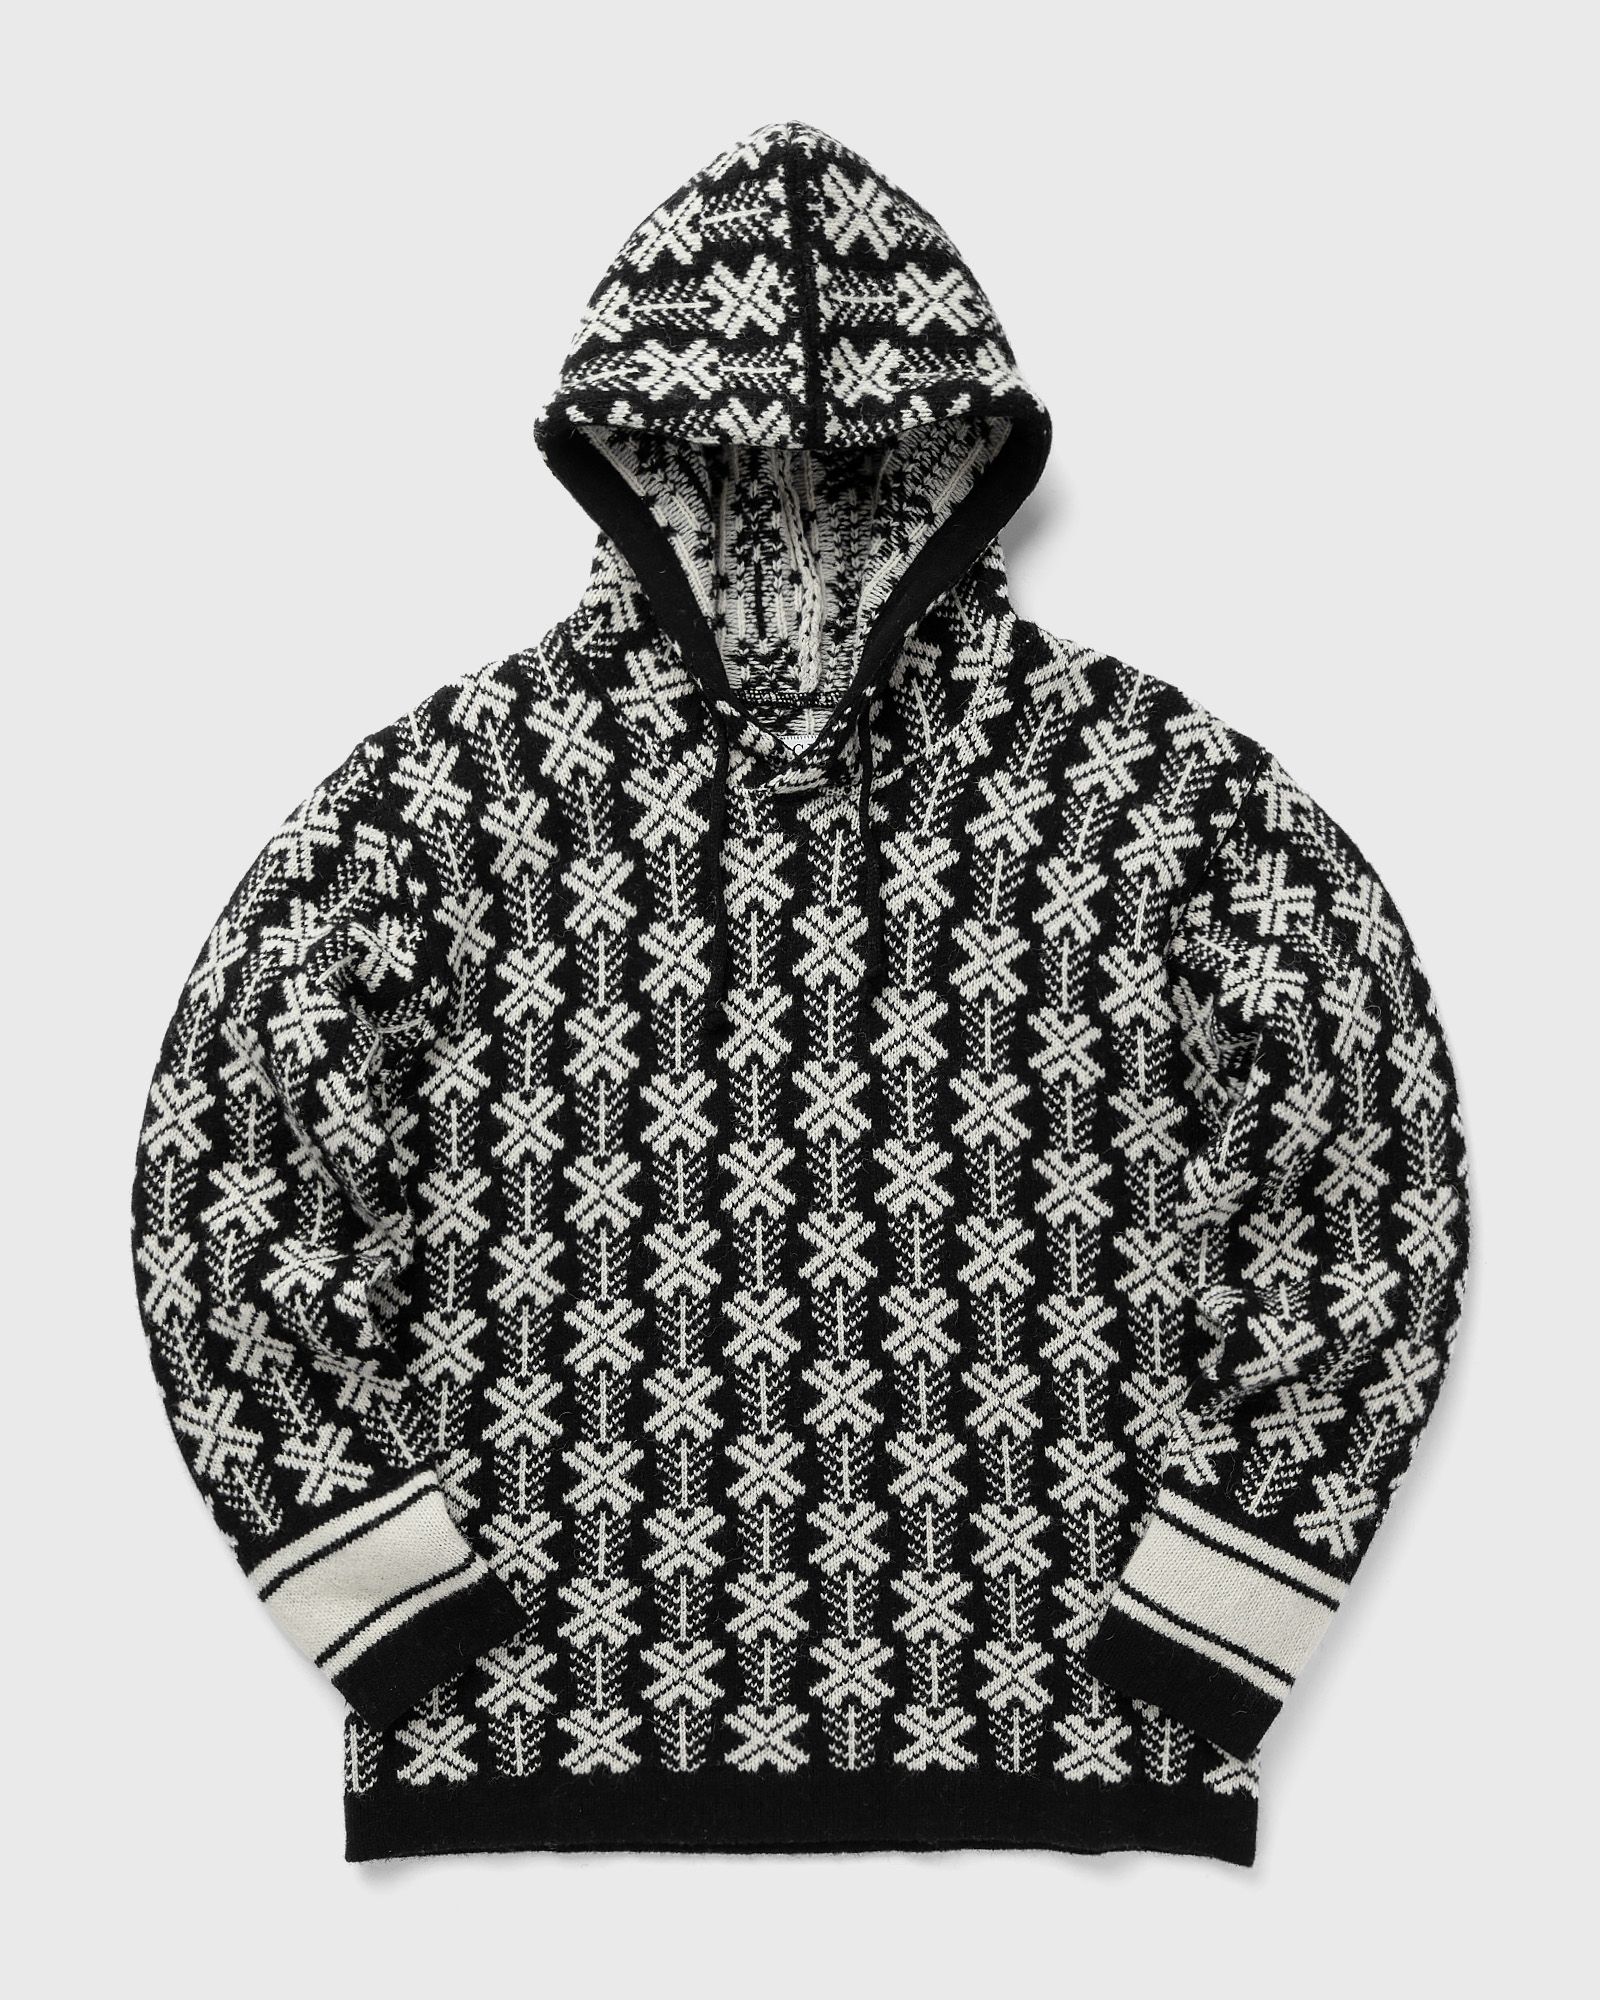 C.P. Company - wool jacquard logo hooded knit men pullovers black|white in größe:xl